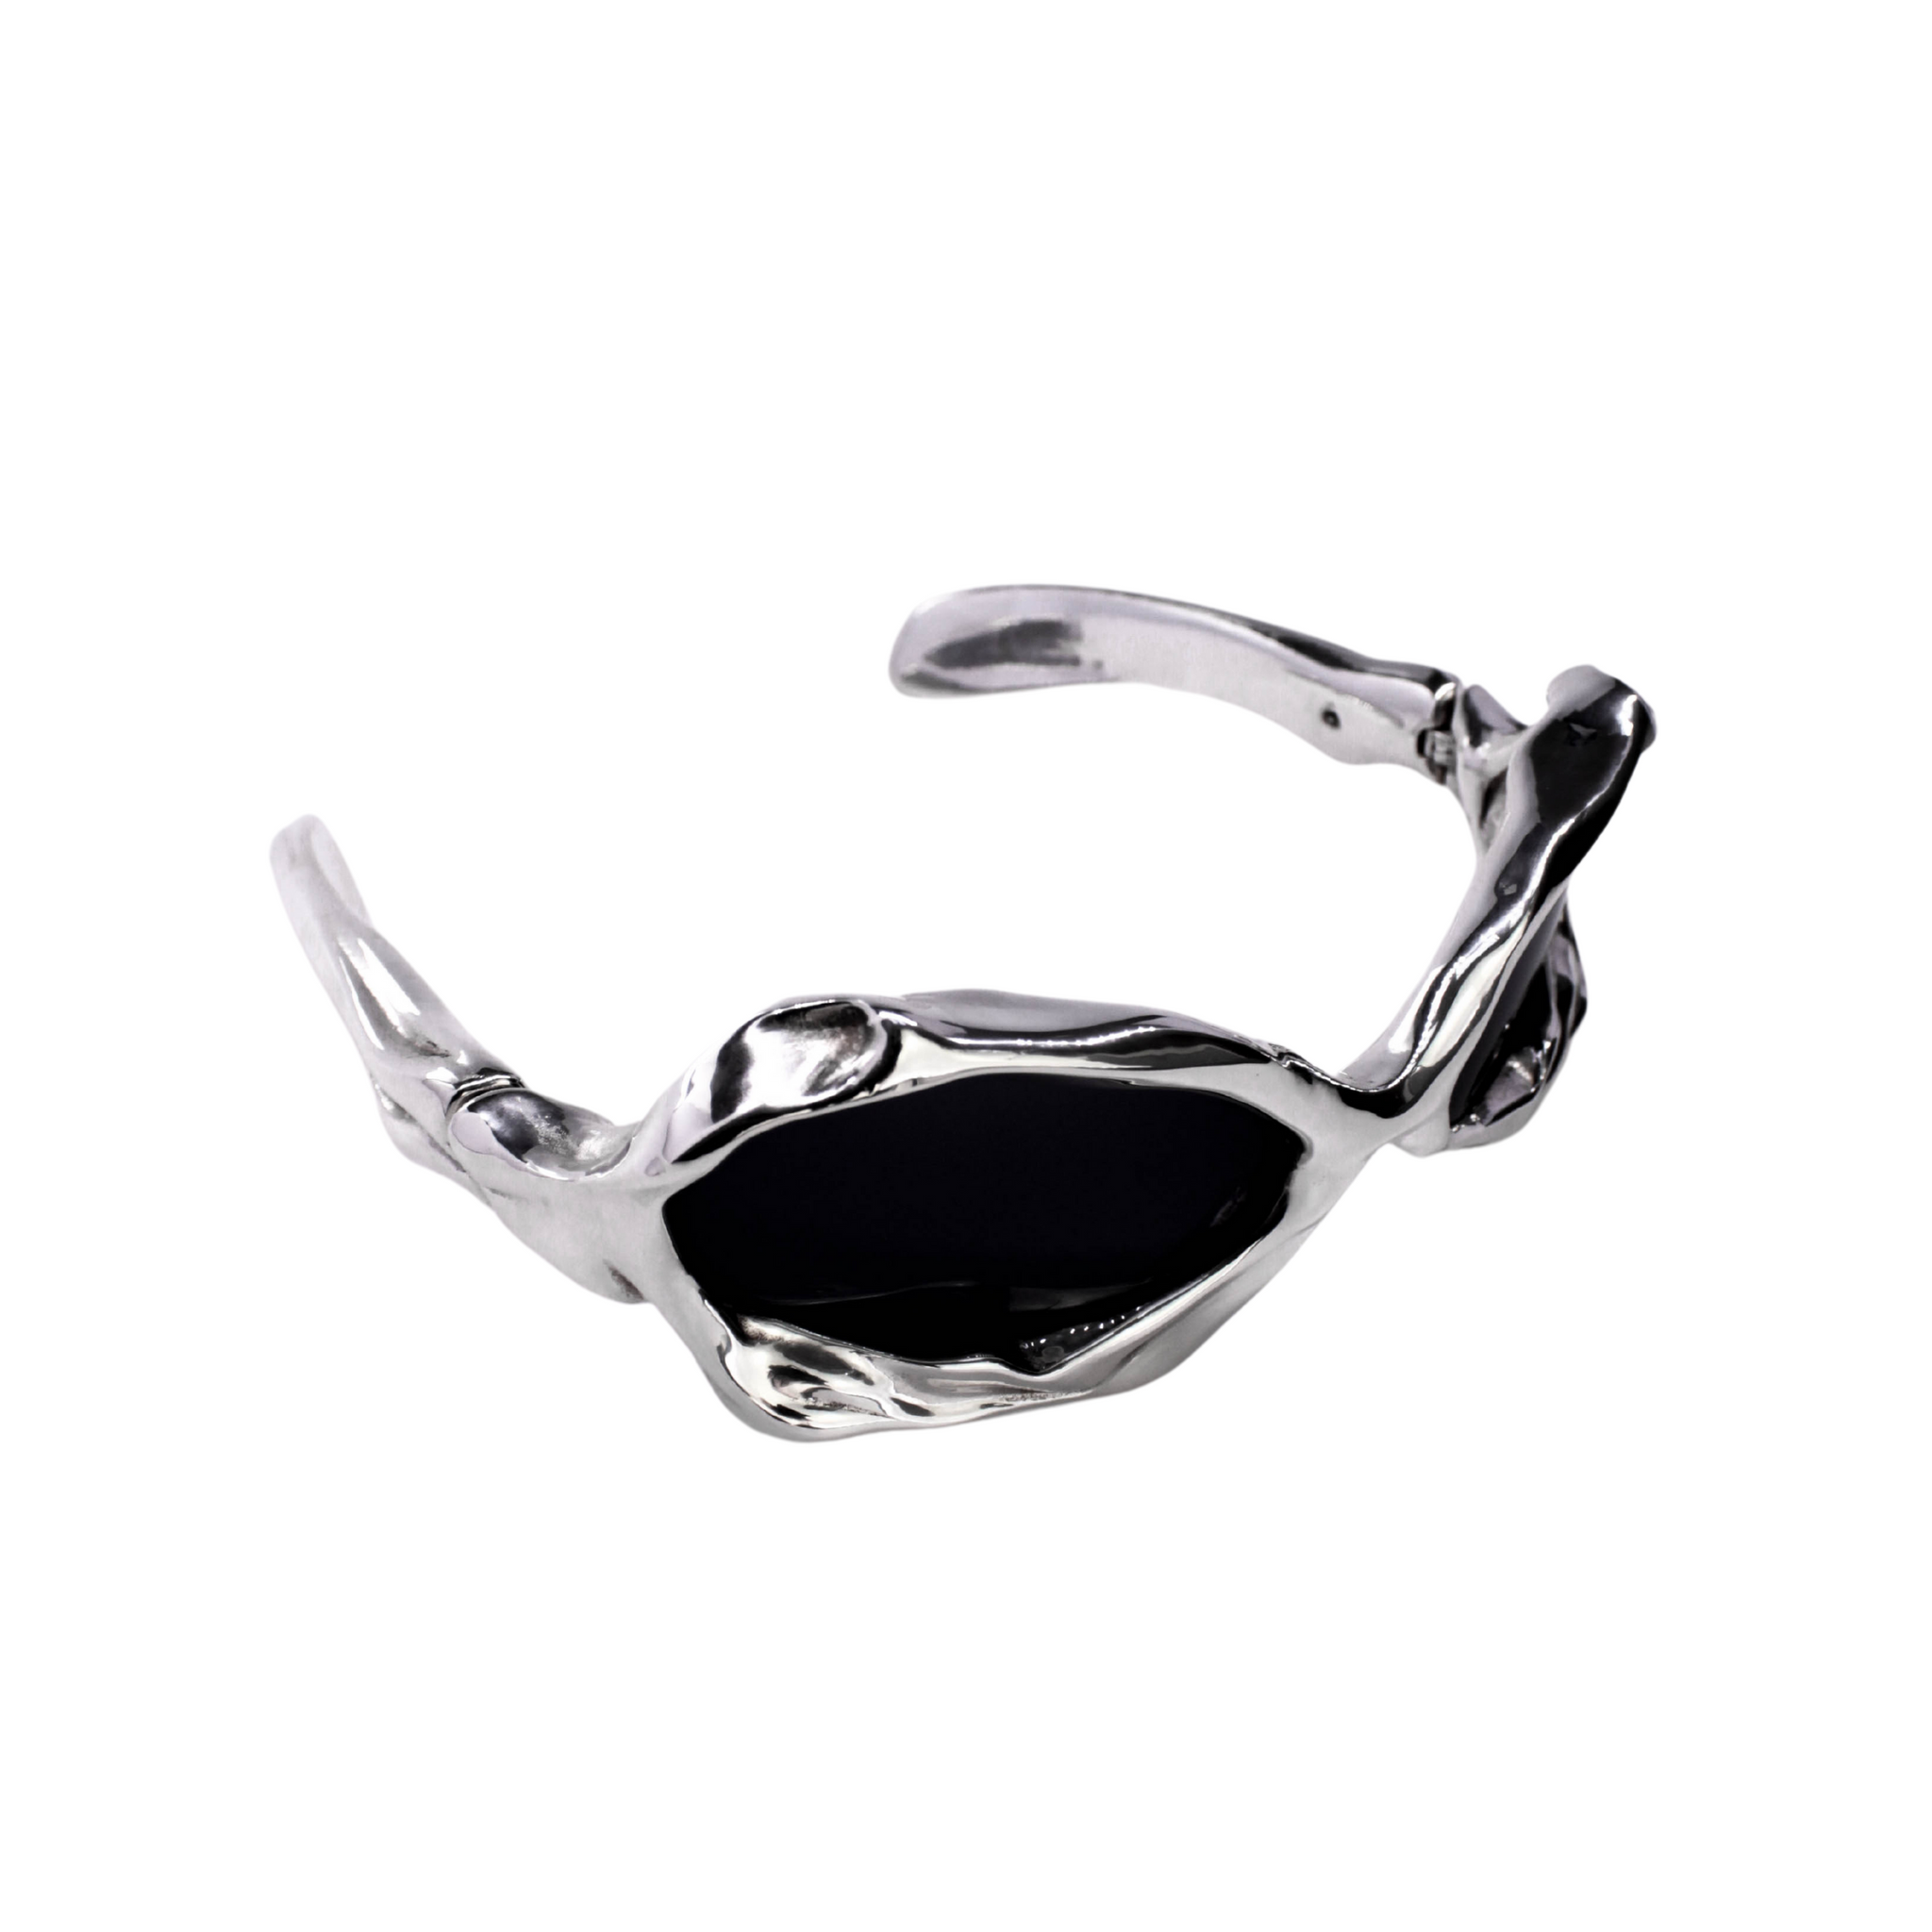 Pre-Order Dragon Eye Glasses - Silver Plated